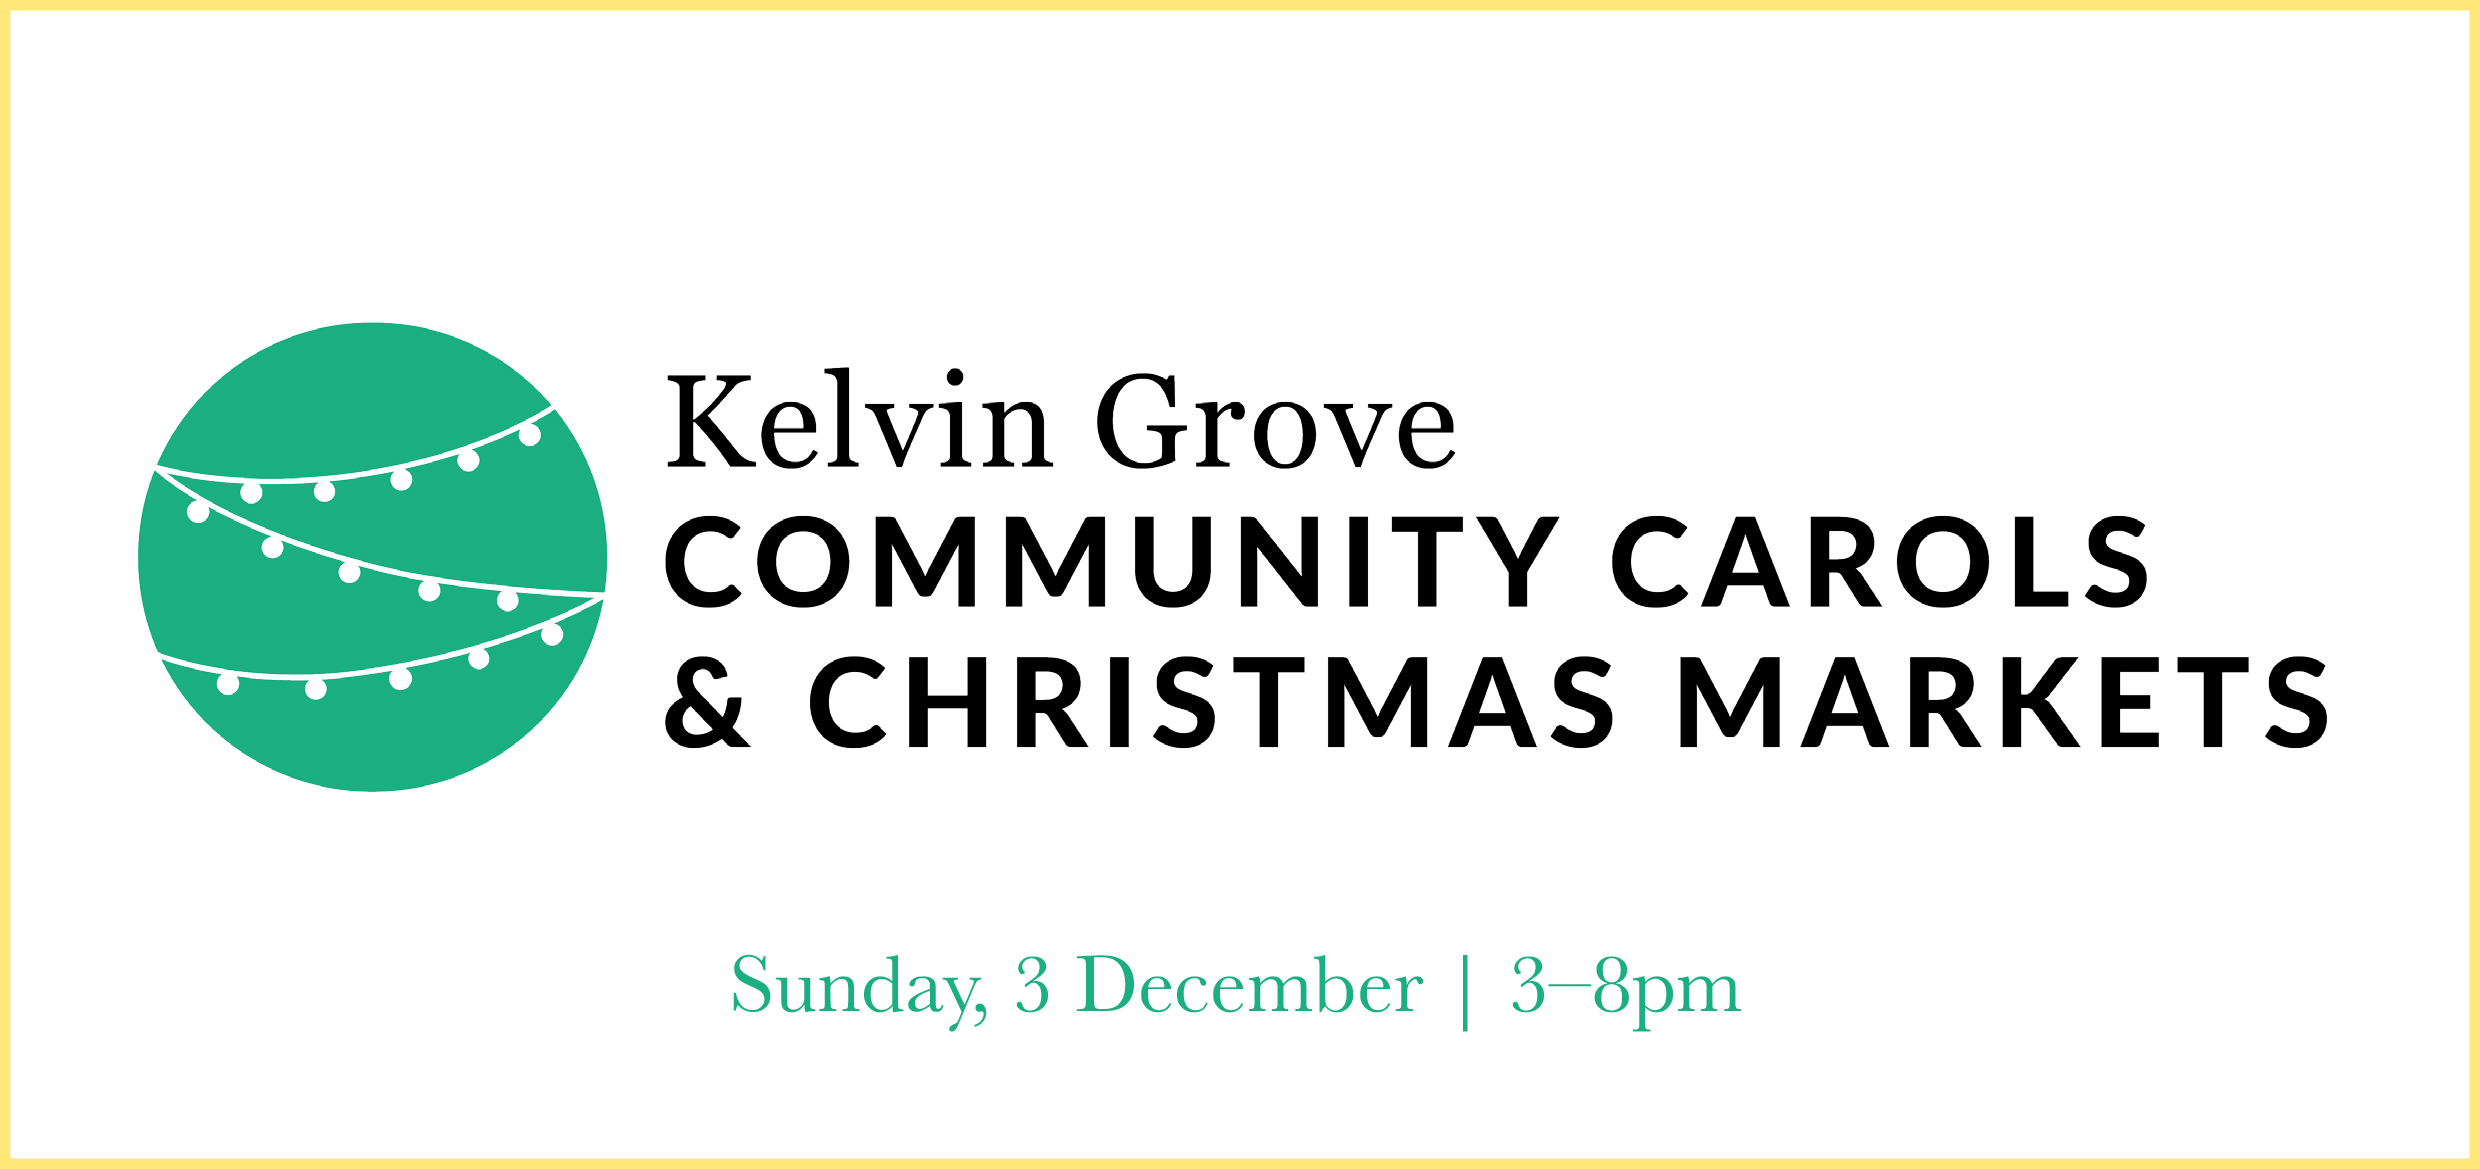 Kelvin Grove Community Carols & Christmas Markets Promotional Material